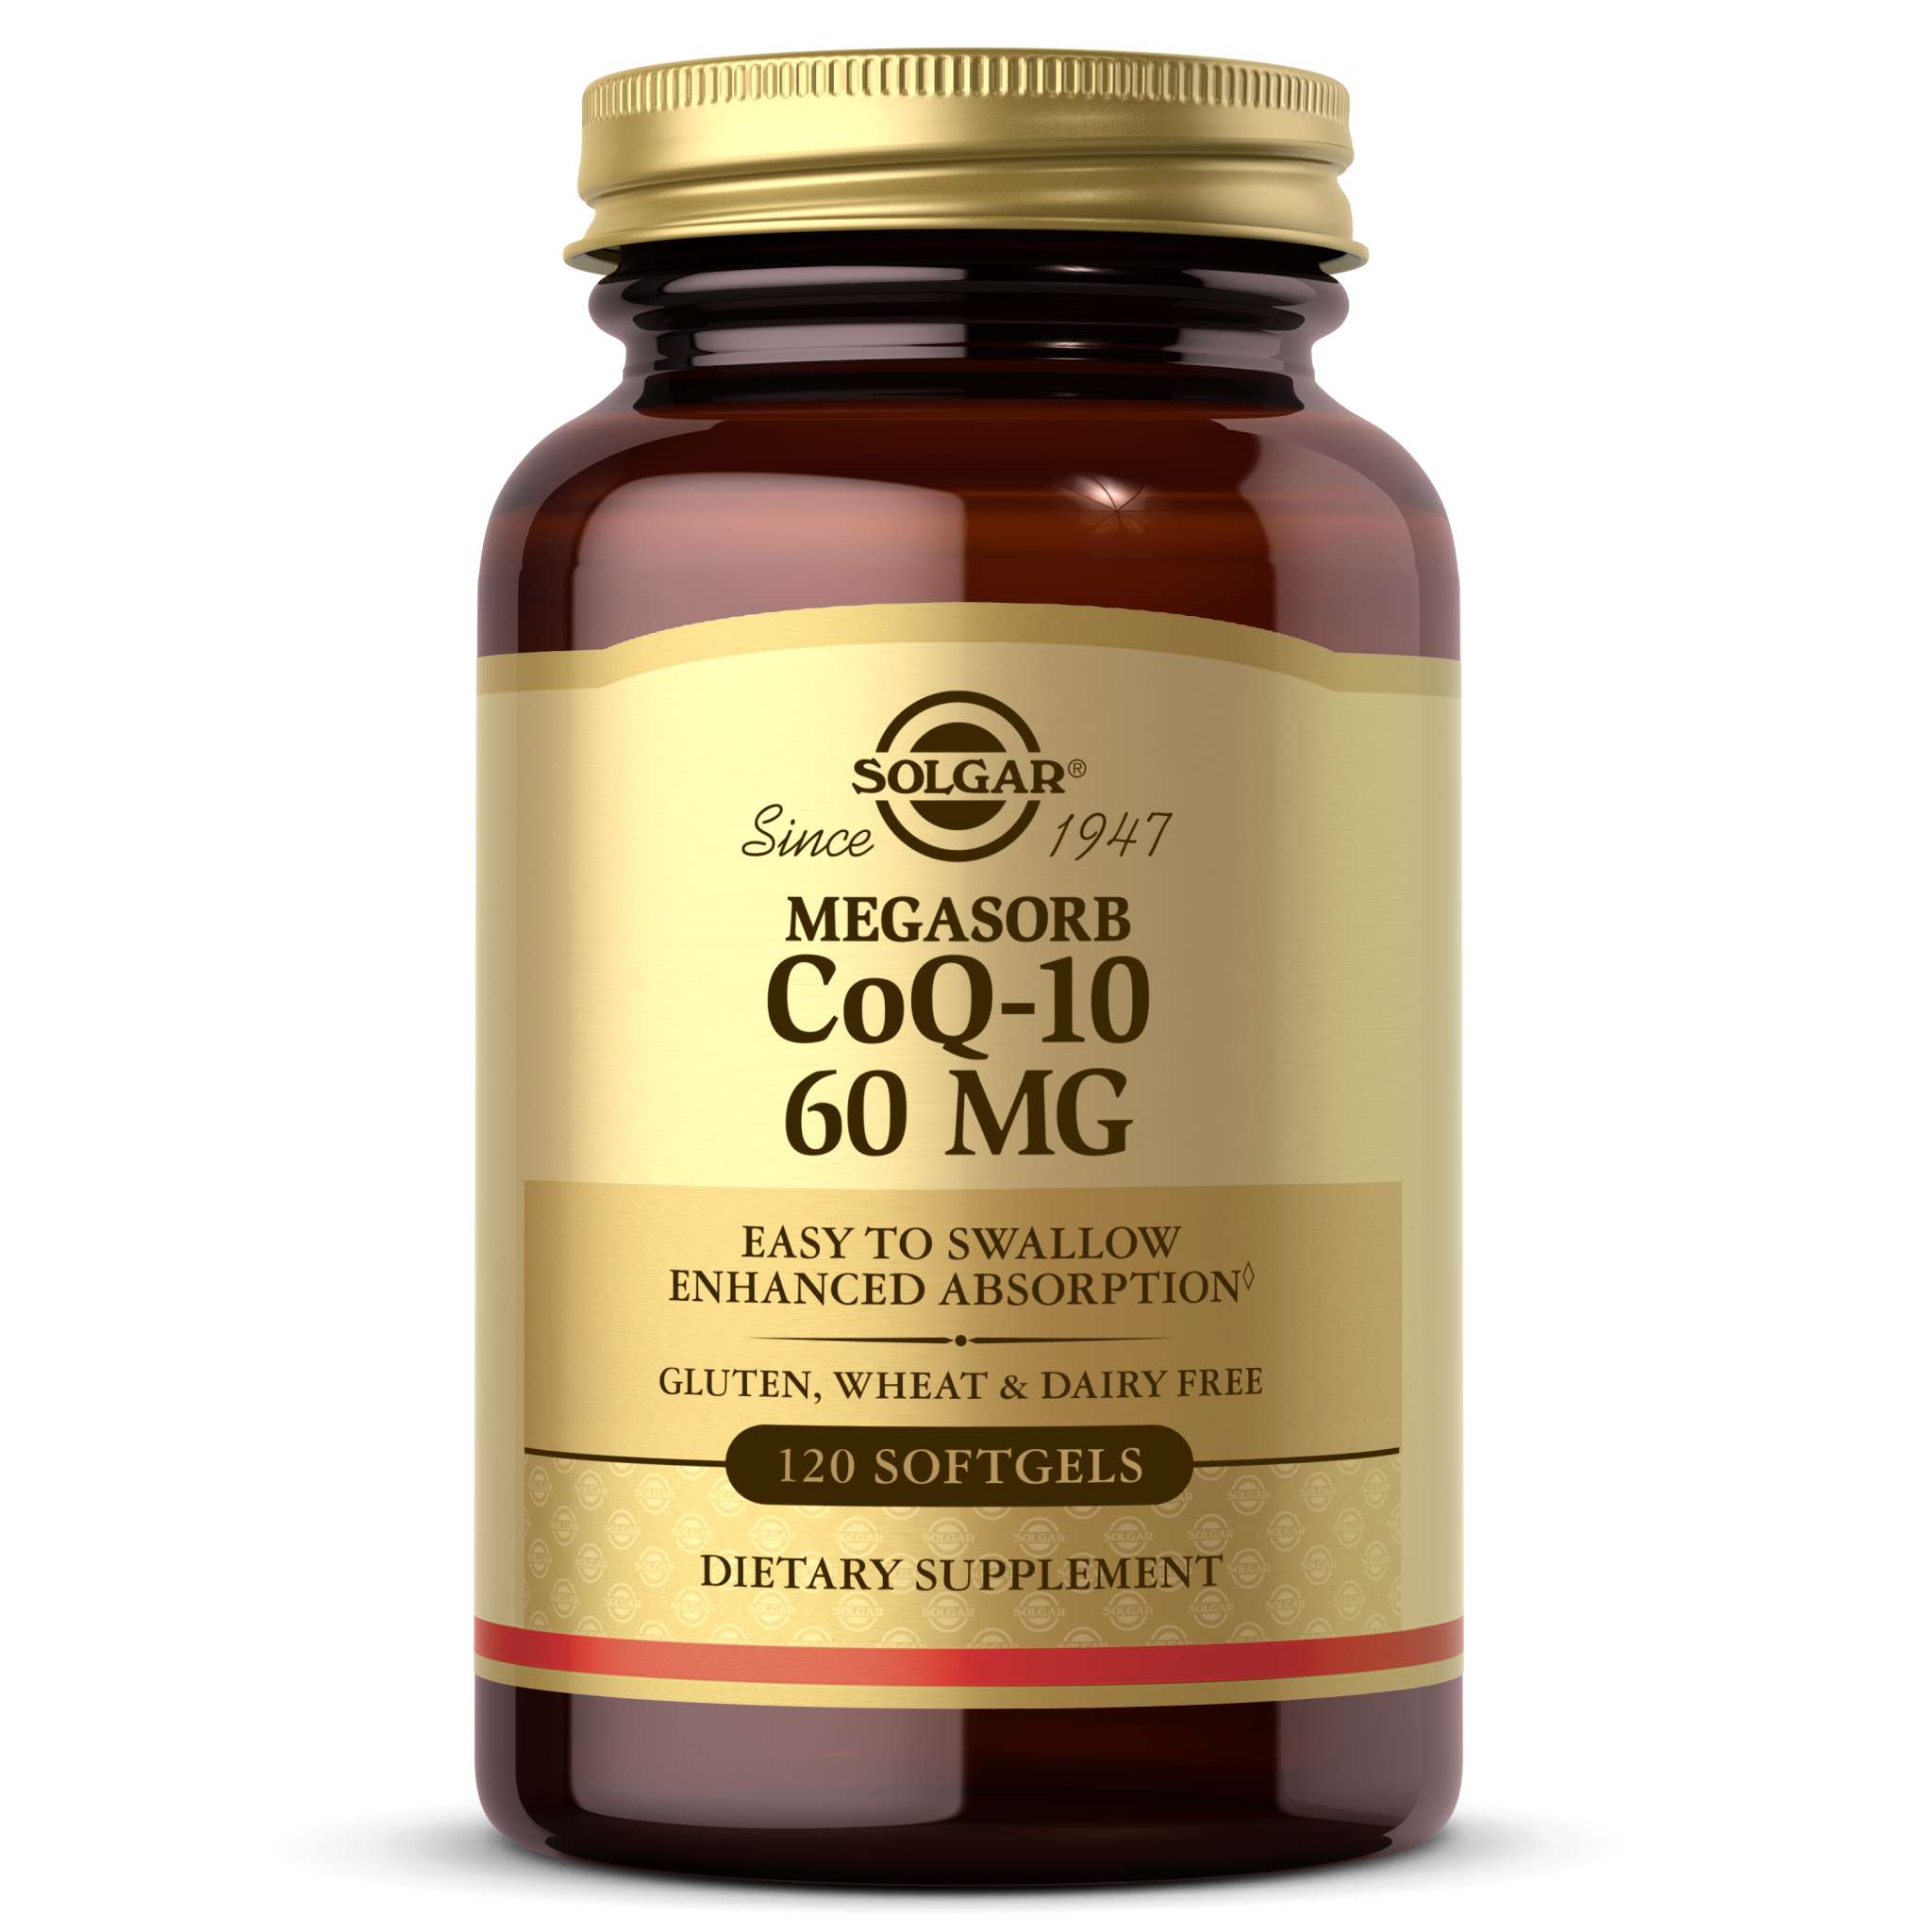 Solgar - Coq10 60 mg softgel